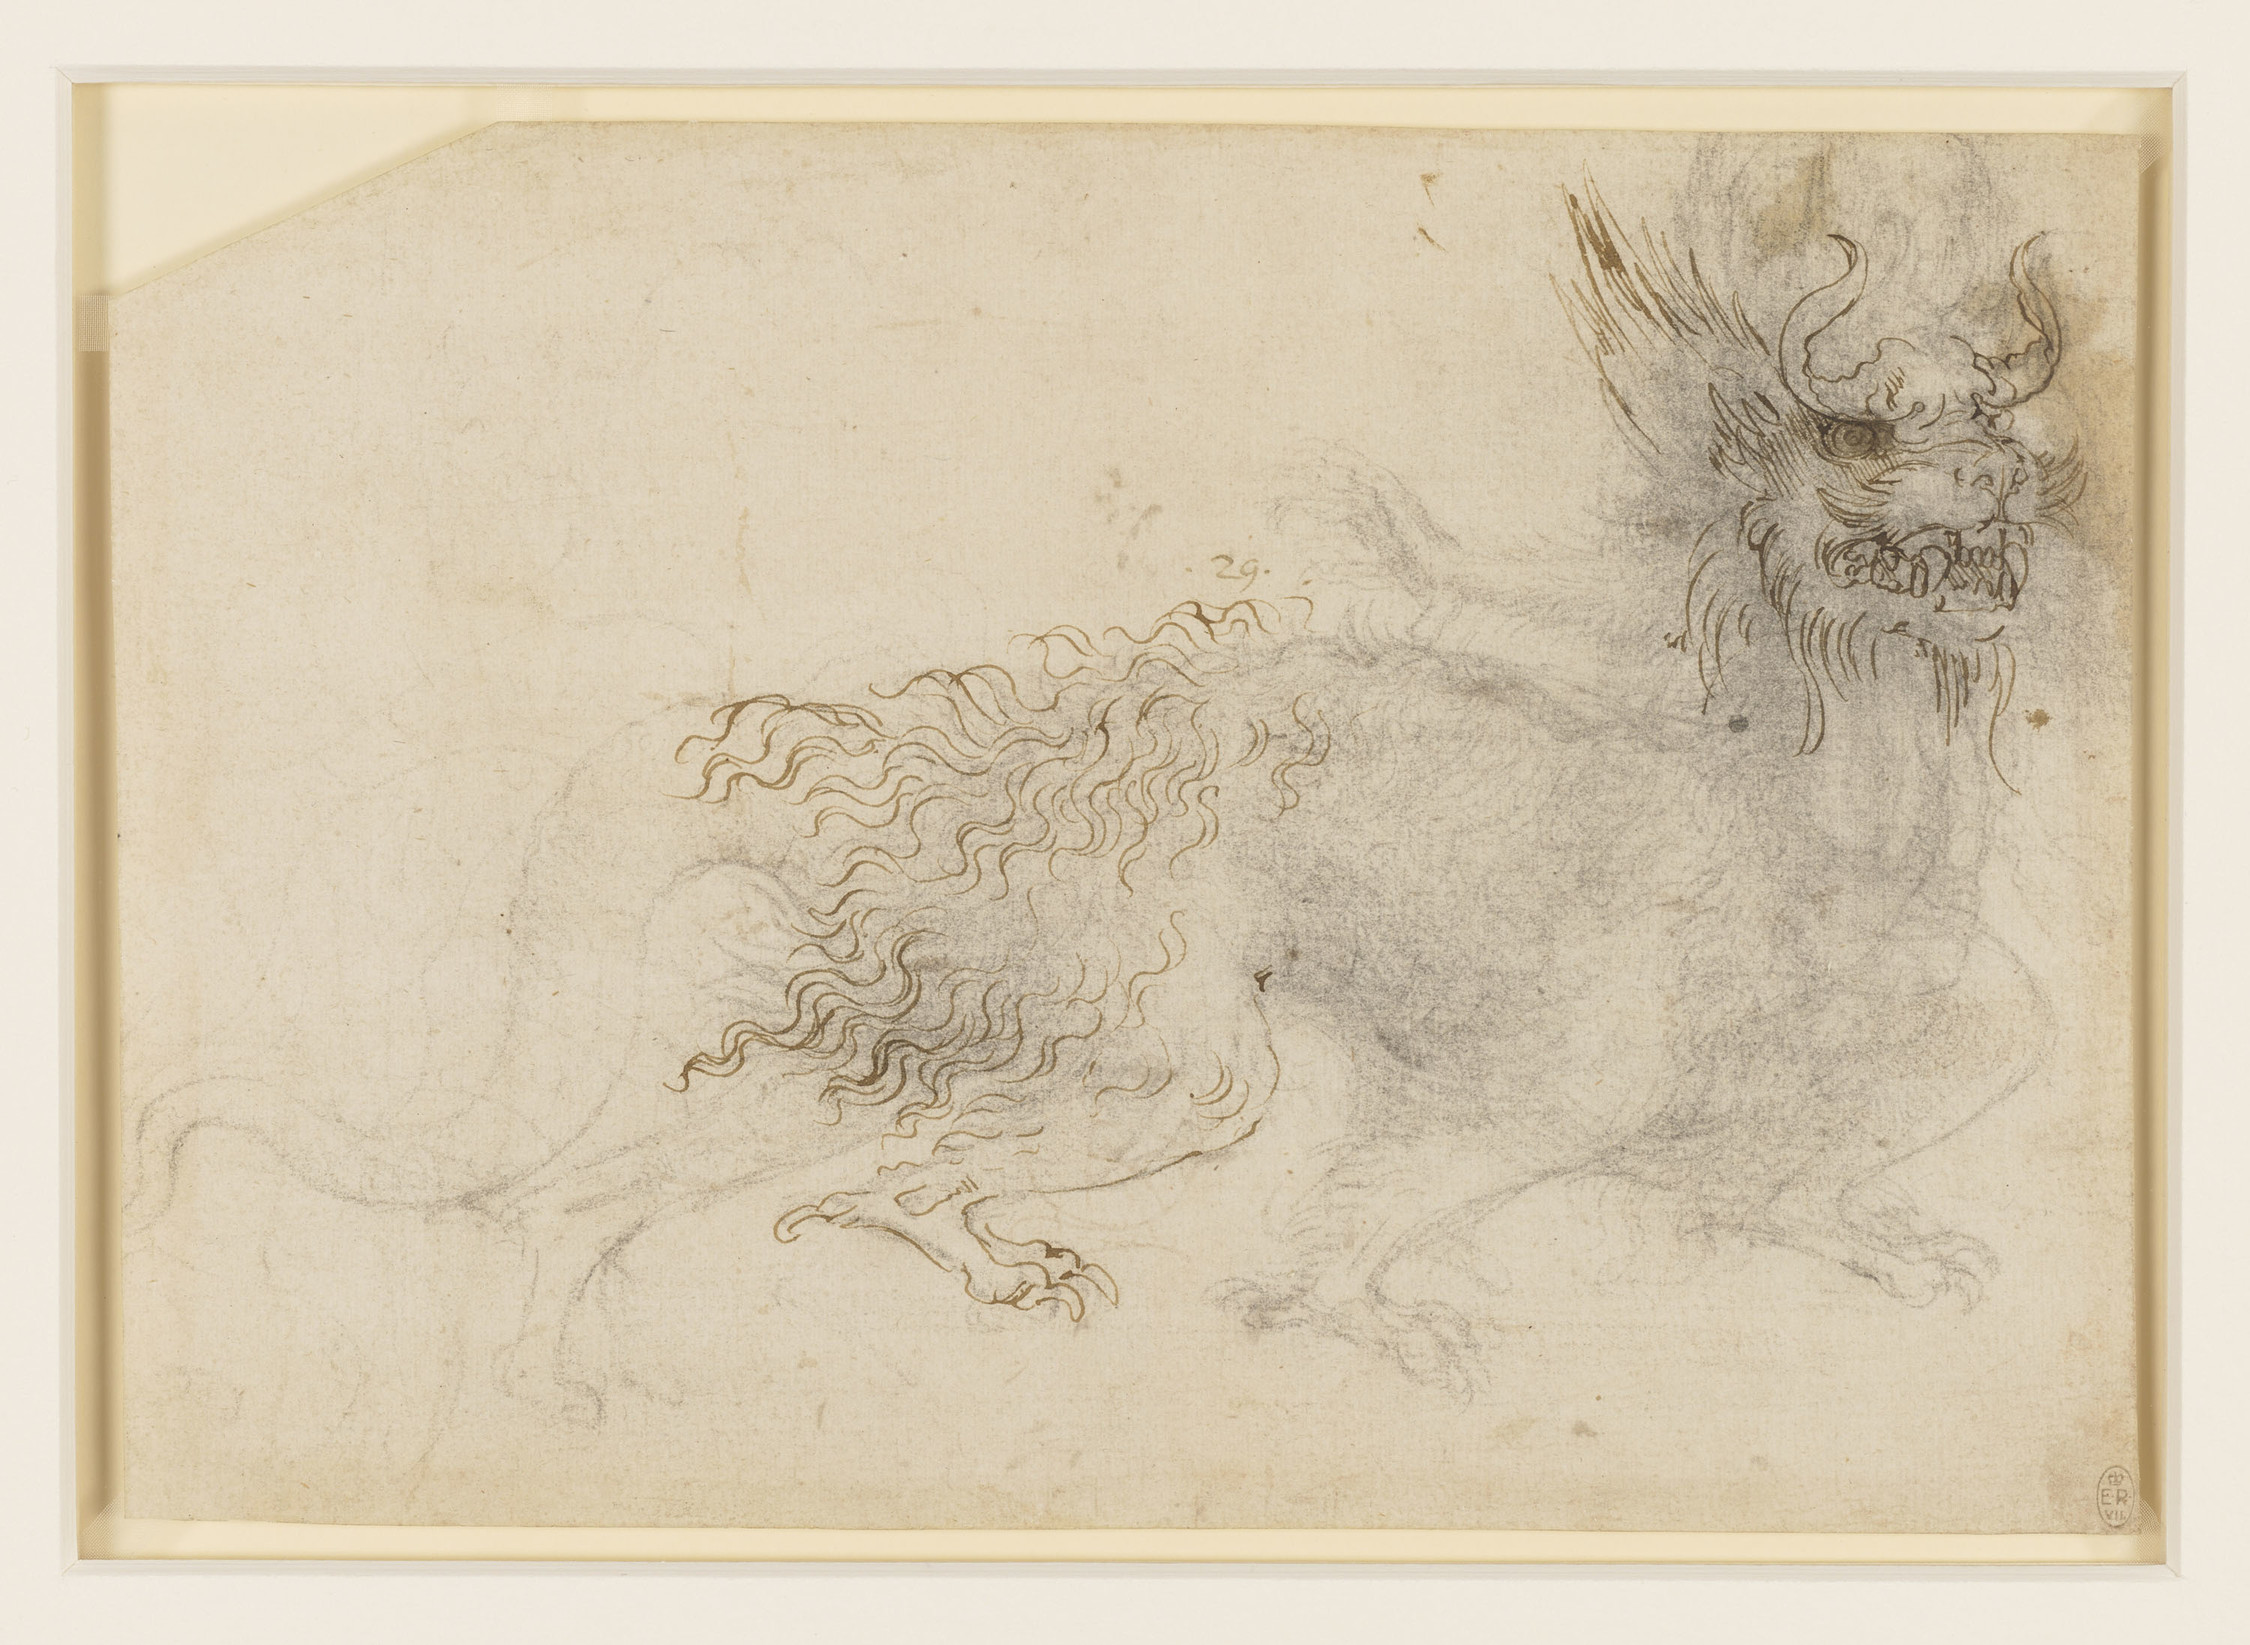 A design for a dragon costume by Leonardo da Vinci - c.1517-18 - 18.8 x 27.0 cm Royal Collection Trust